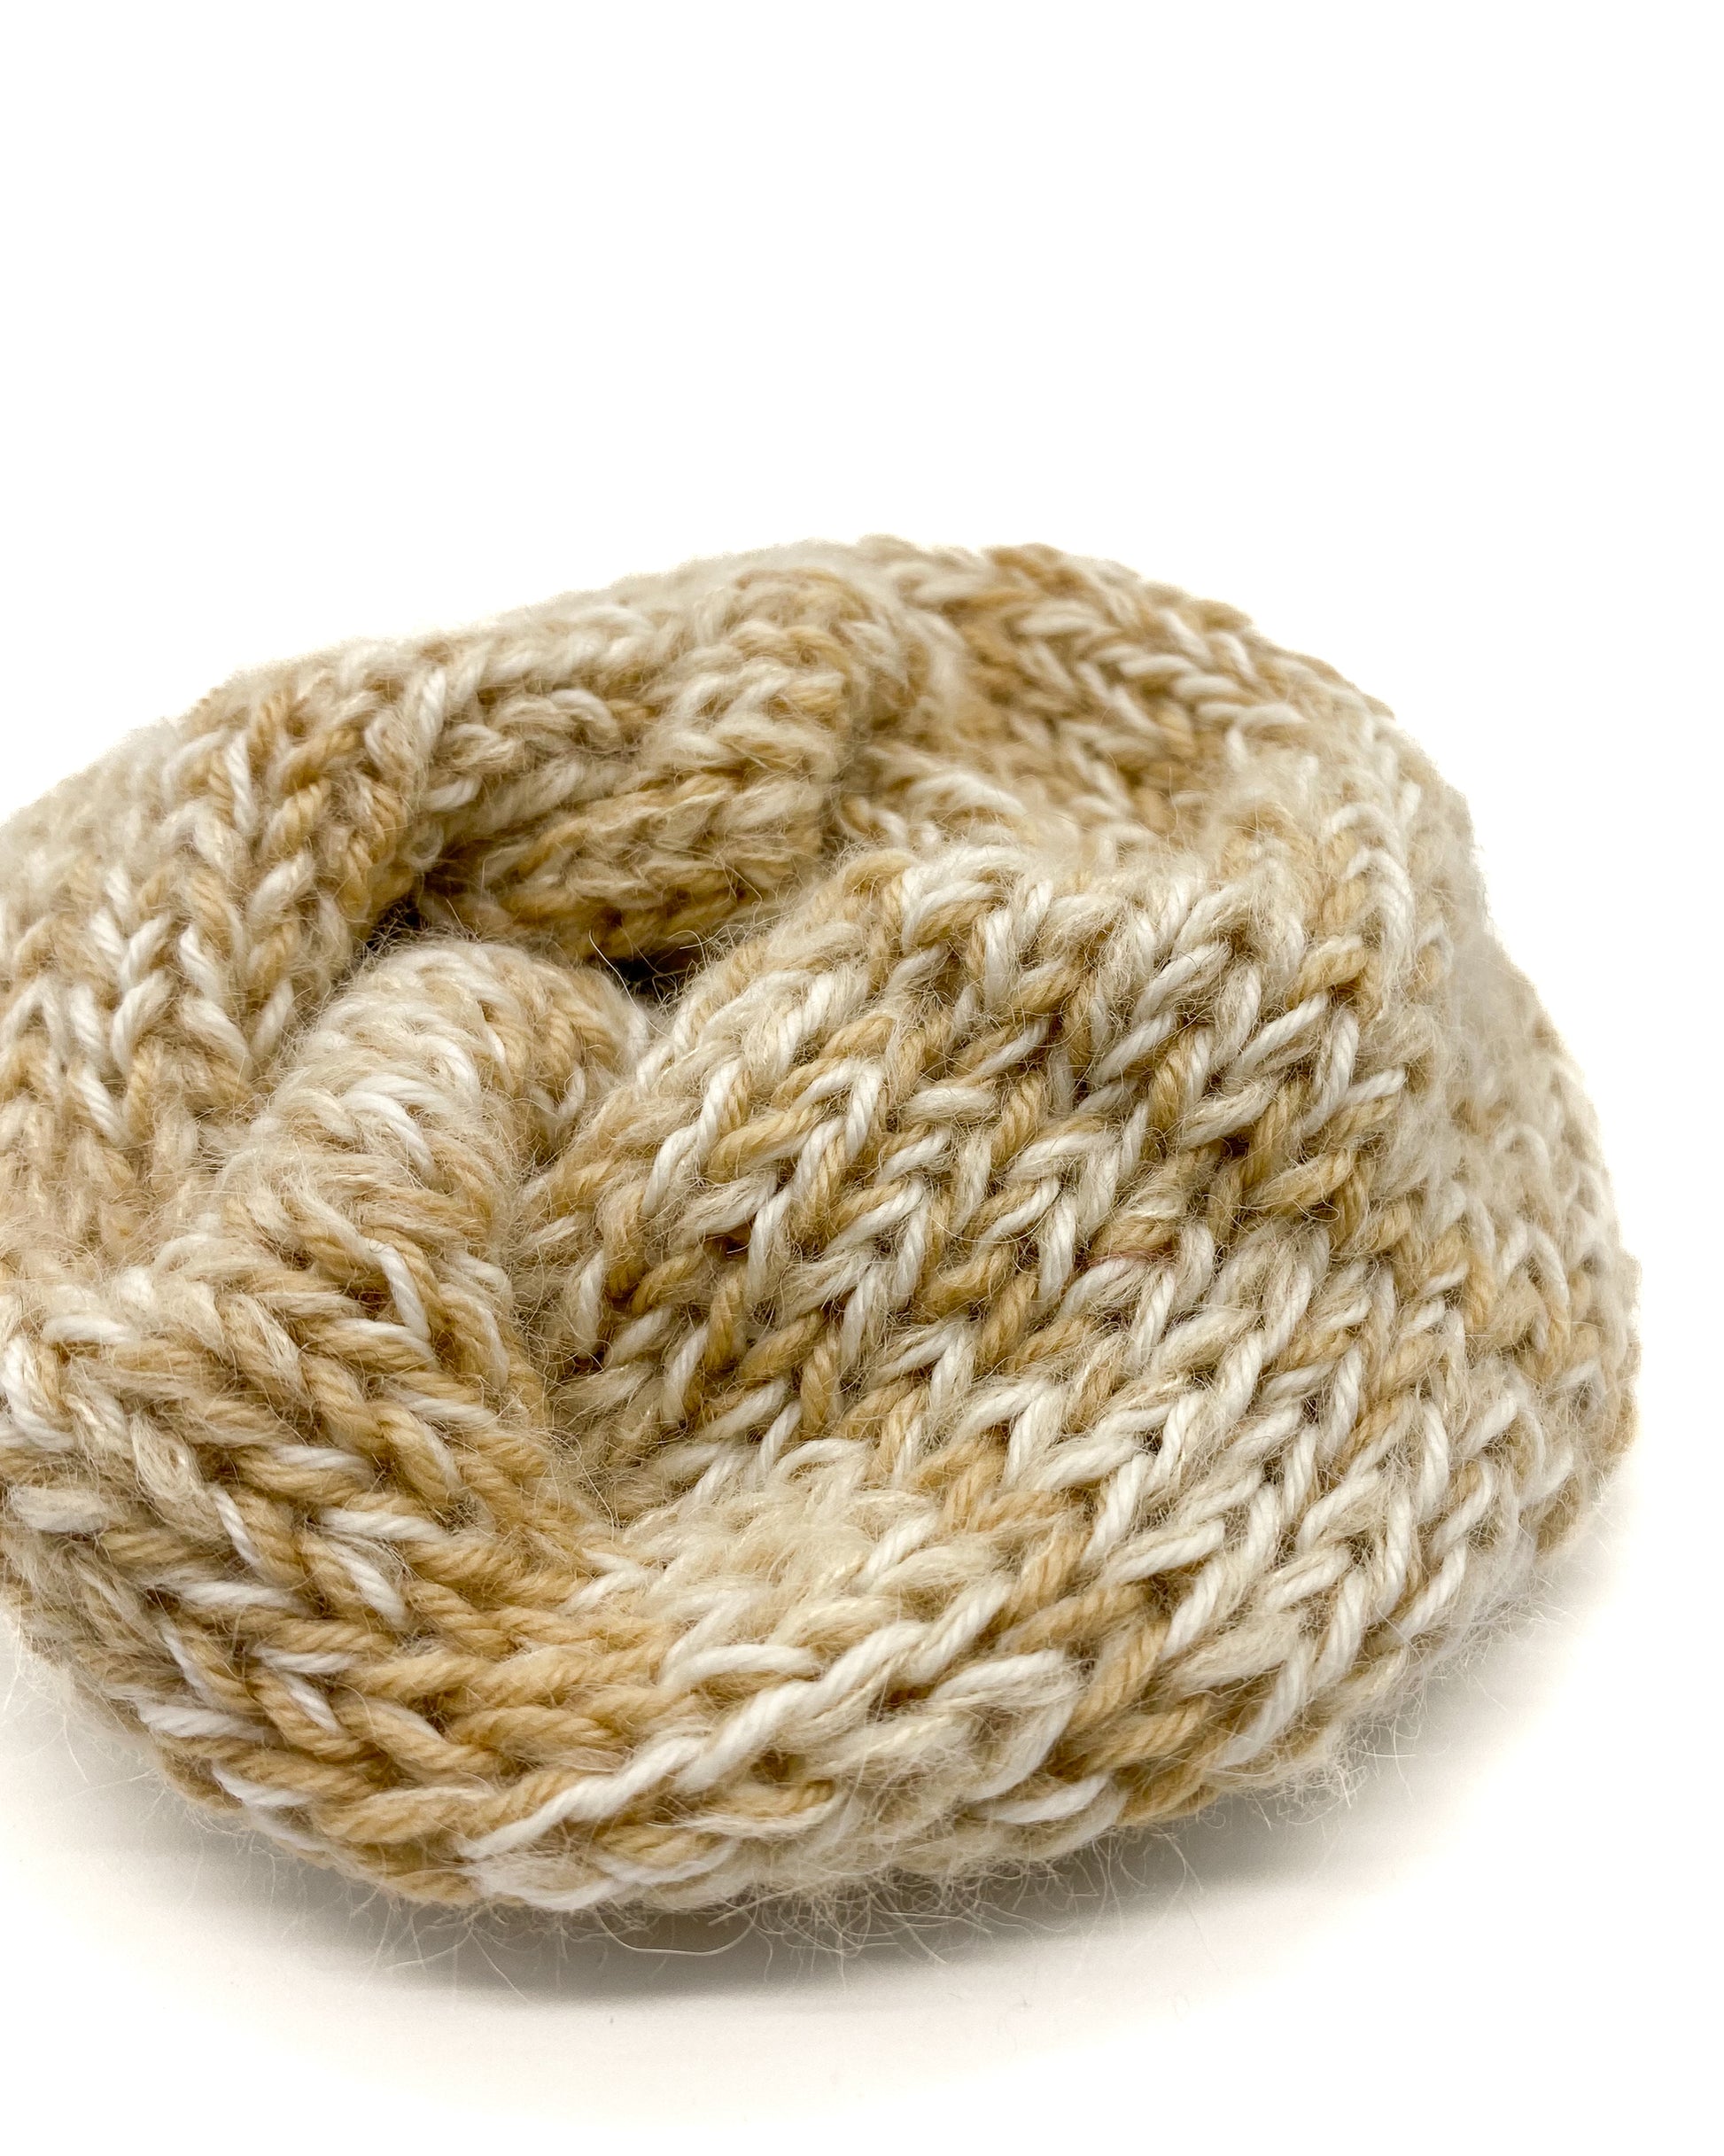 KMELLIA Hand Dyed Oversized Knitted Wool Chouchou Scrunchie